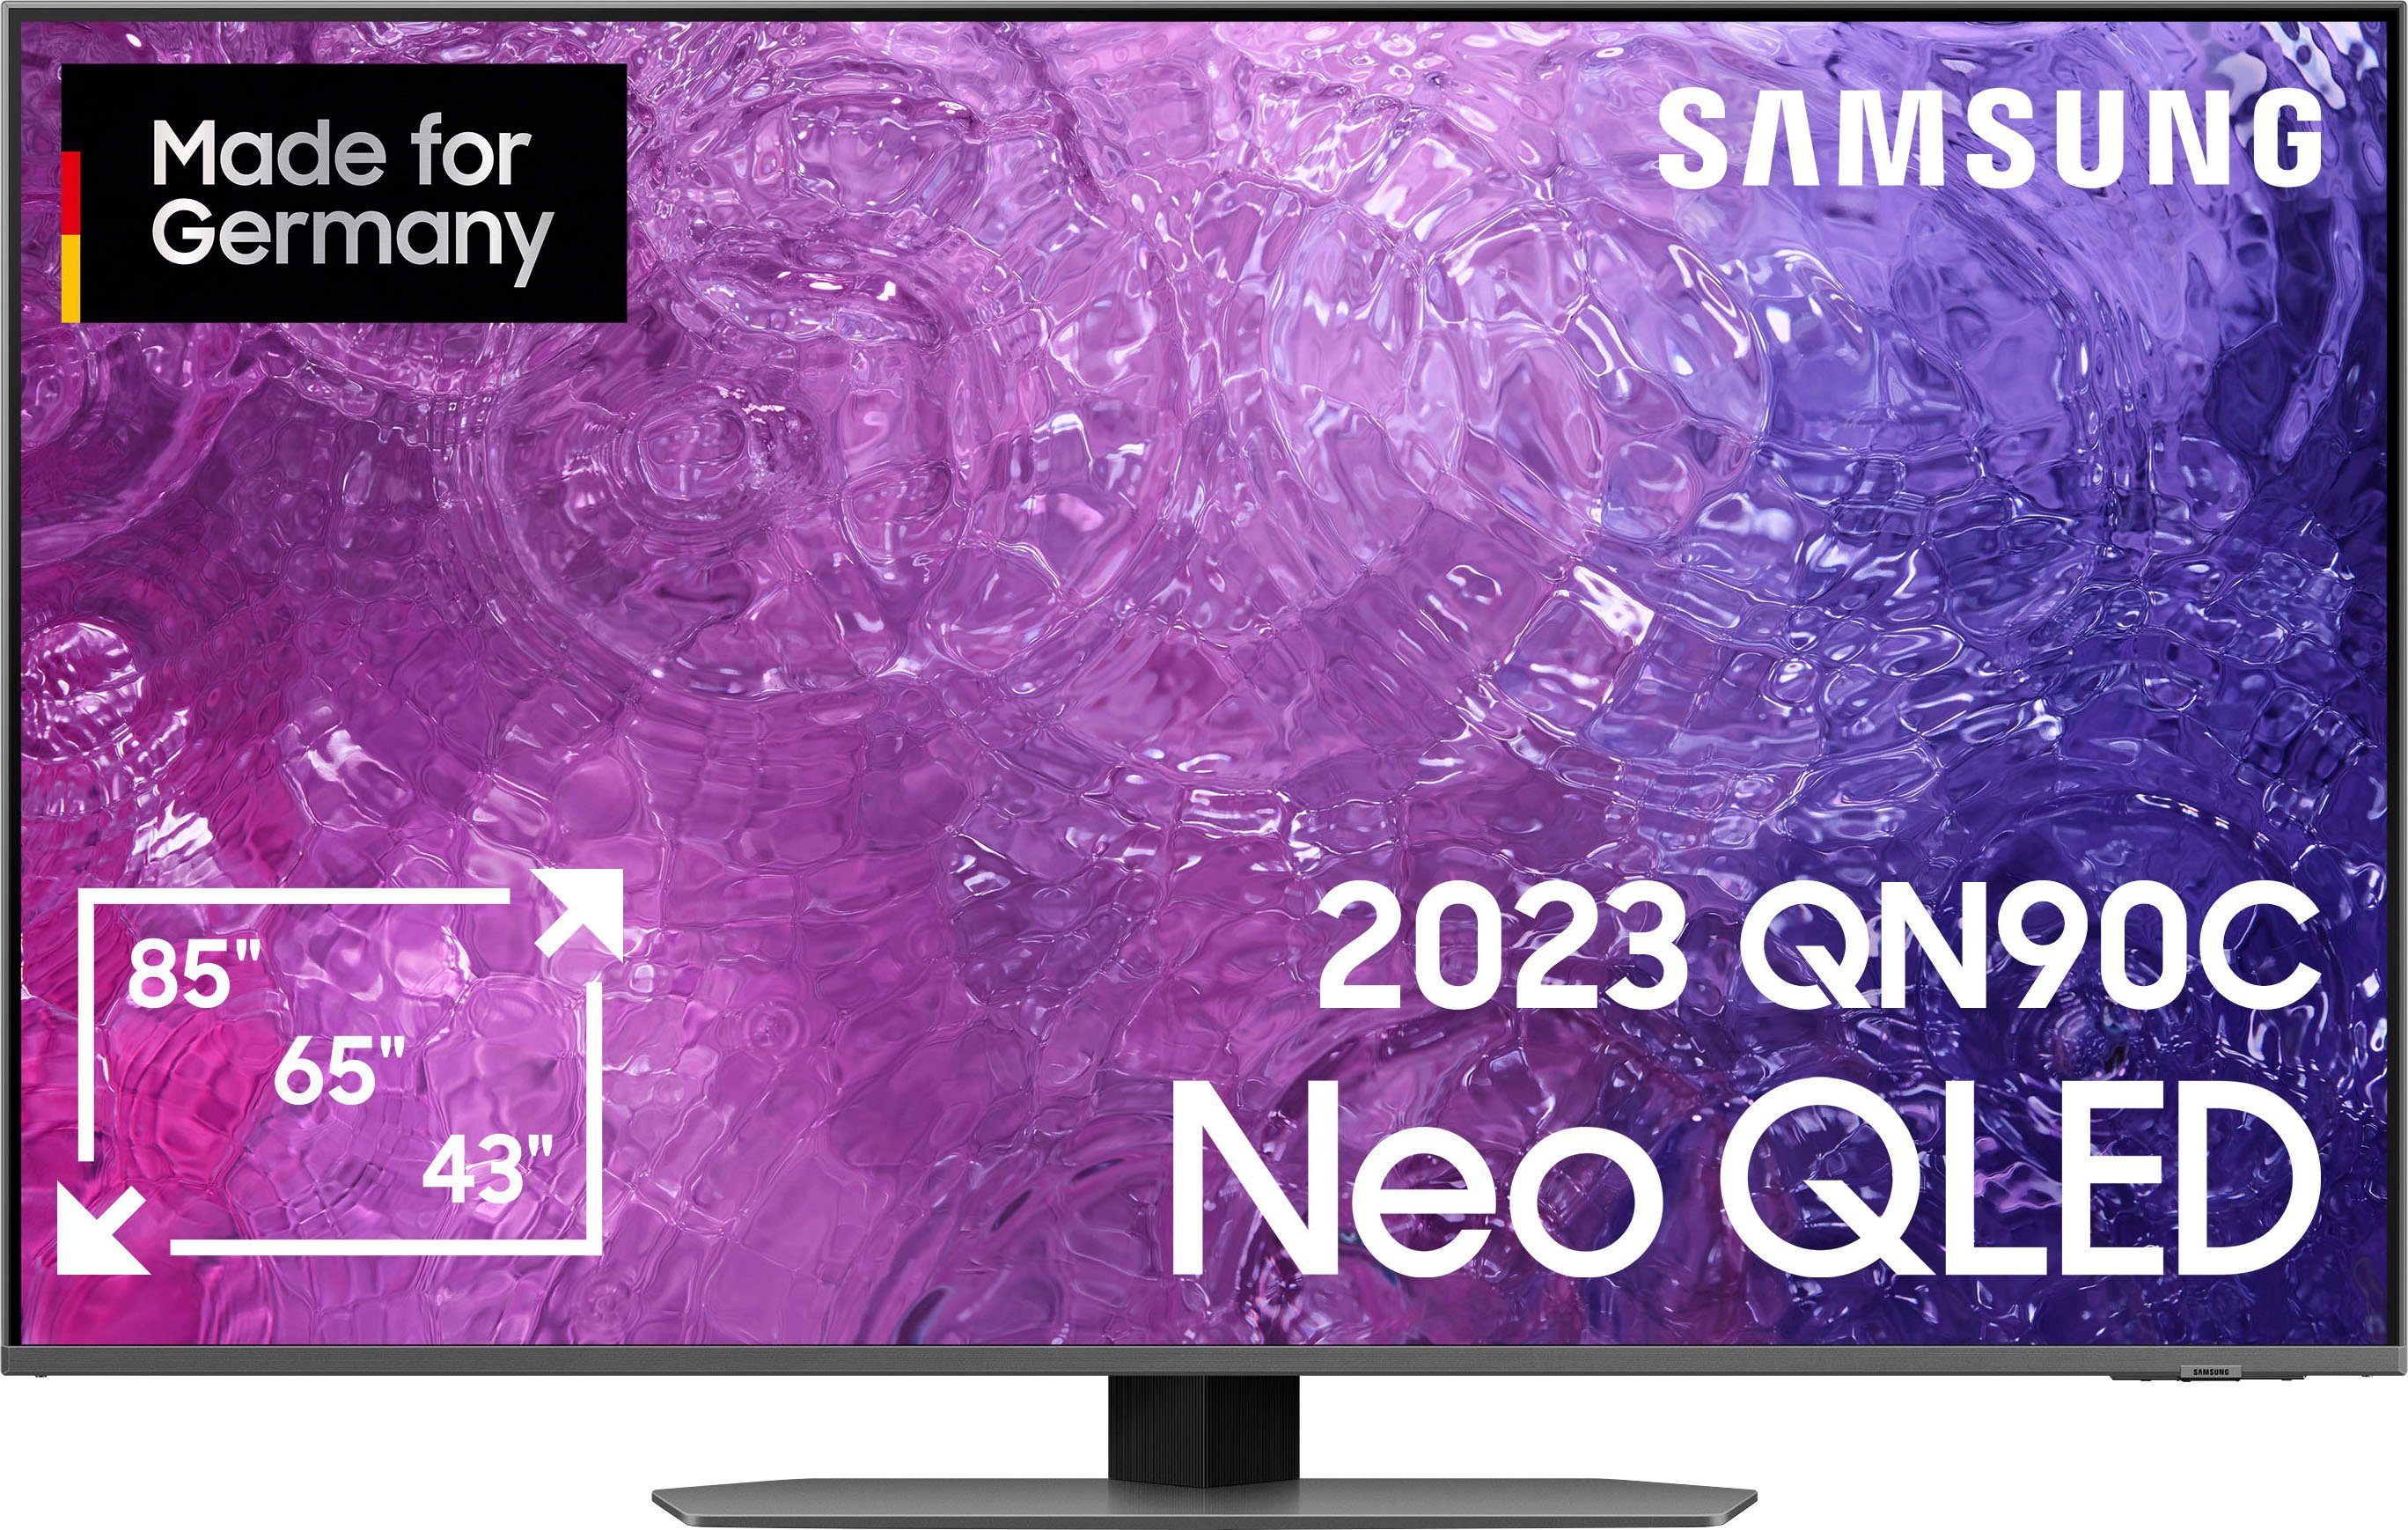 Smart-TV, Samsung GQ43QN90CAT cm/43 Prozessor LED-Fernseher HDR, Hub) Neo Quantum (108 Zoll, Quantum 4K, Gaming Neural